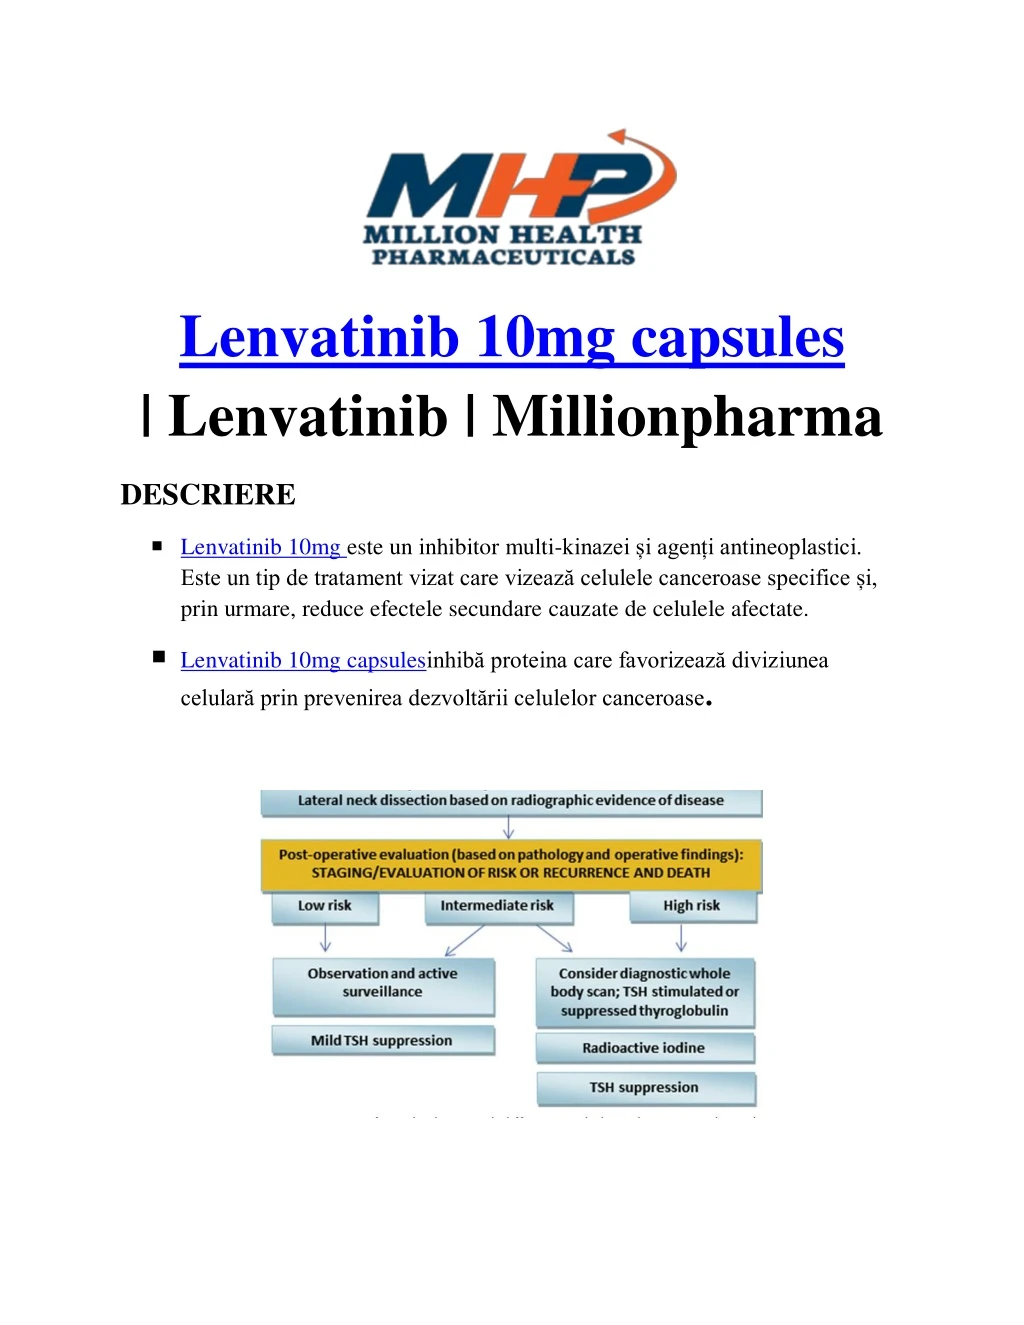 lenvatinib 10mg capsules lenvatinib millionpharma